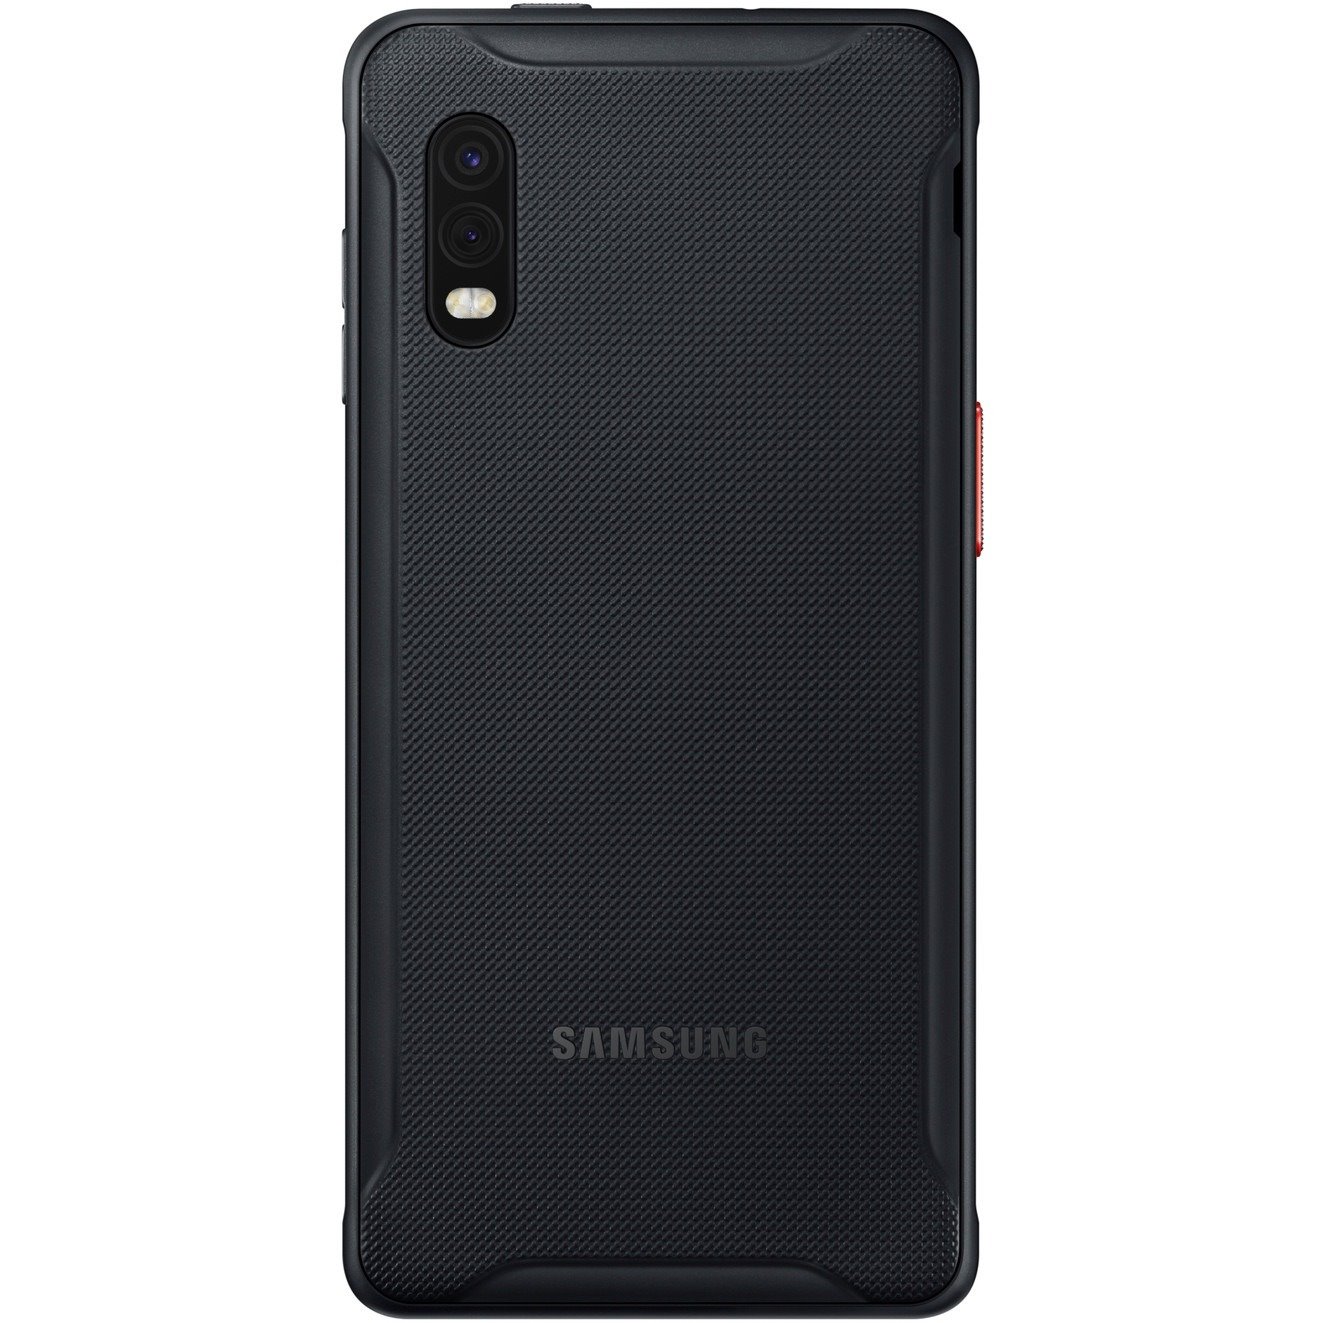 Samsung Galaxy XCover Pro SM-G715U1 64 GB Rugged Smartphone - 6.3" TFT LCD Full HD Plus 2340 x 1080 - Octa-core (Cortex A73Quad-core (4 Core) 2.30 GHz + Cortex A53 Quad-core (4 Core) 1.70 GHz - 4 GB RAM - Android 10 - 4G - Black